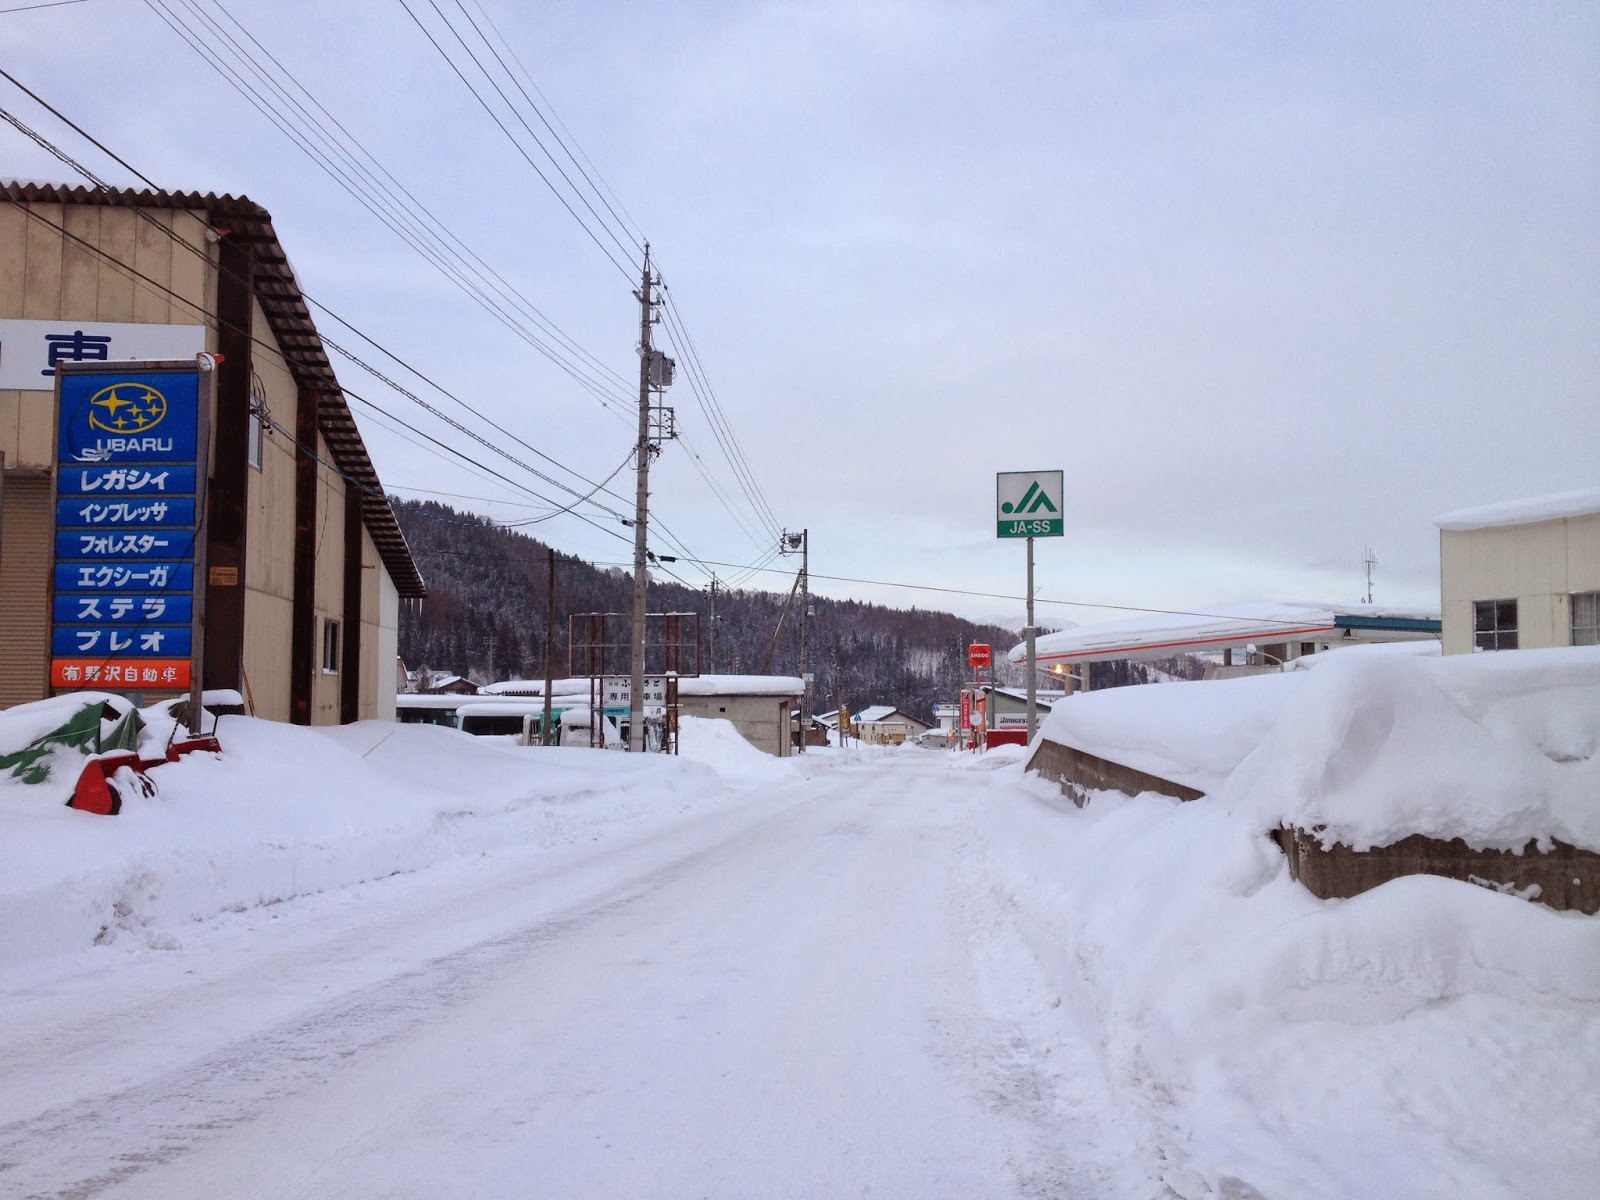 Nozawa Onsen Snow Report 6 February 2014